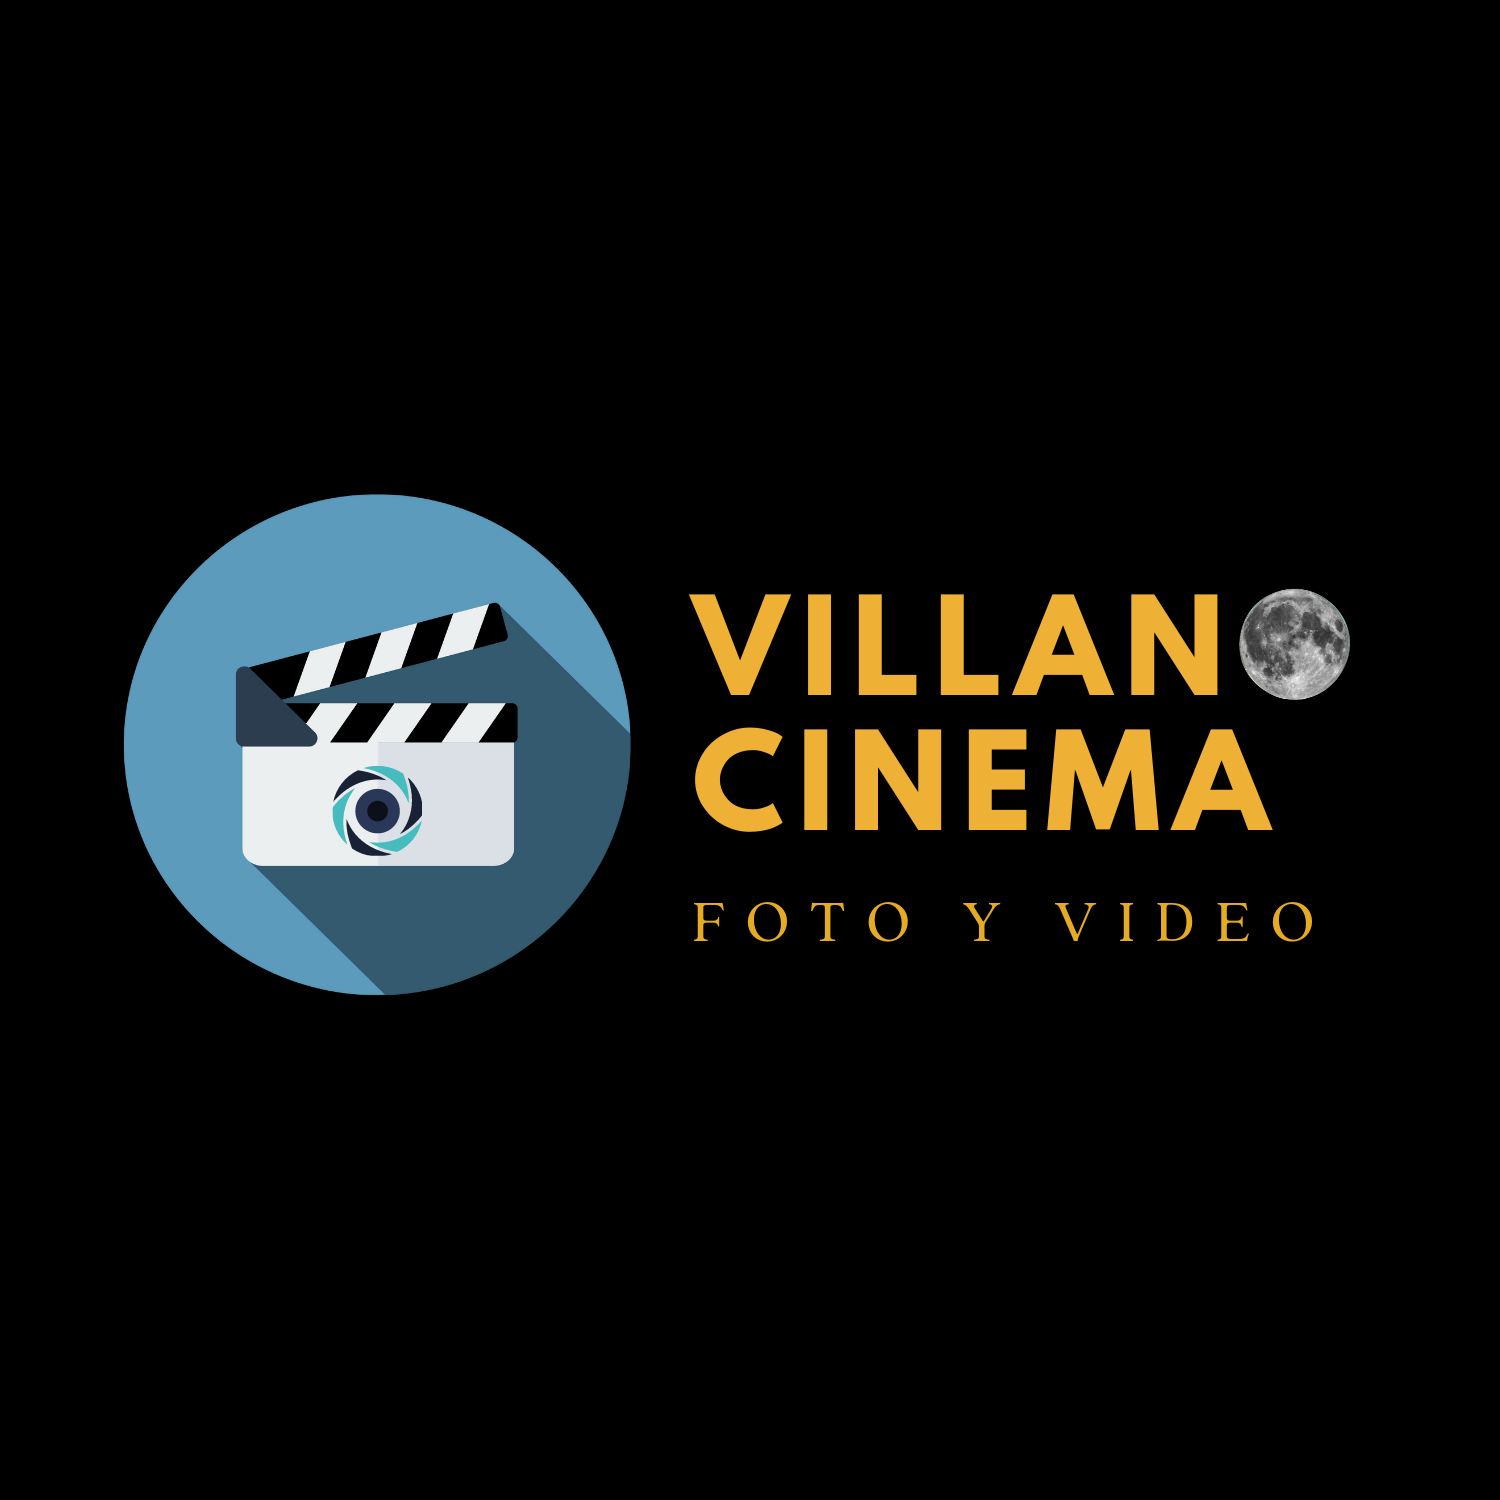 Villano Cinema